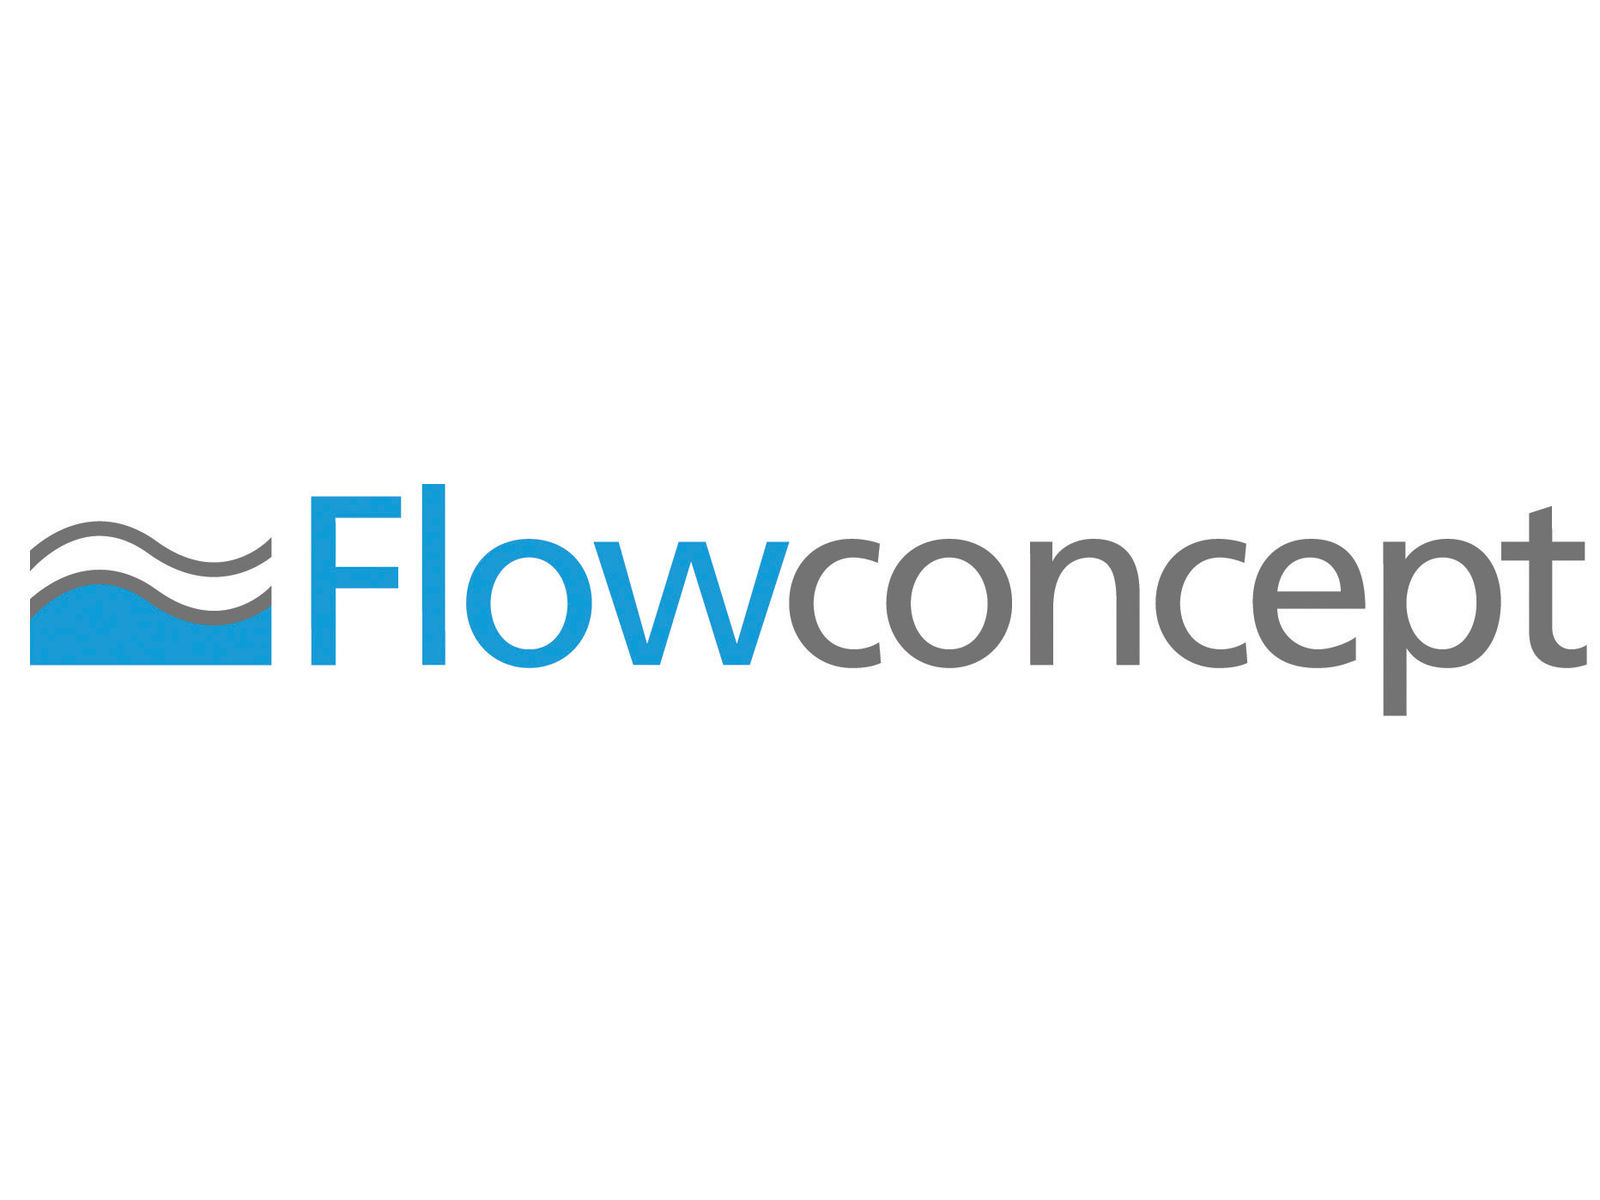 Flowconcept